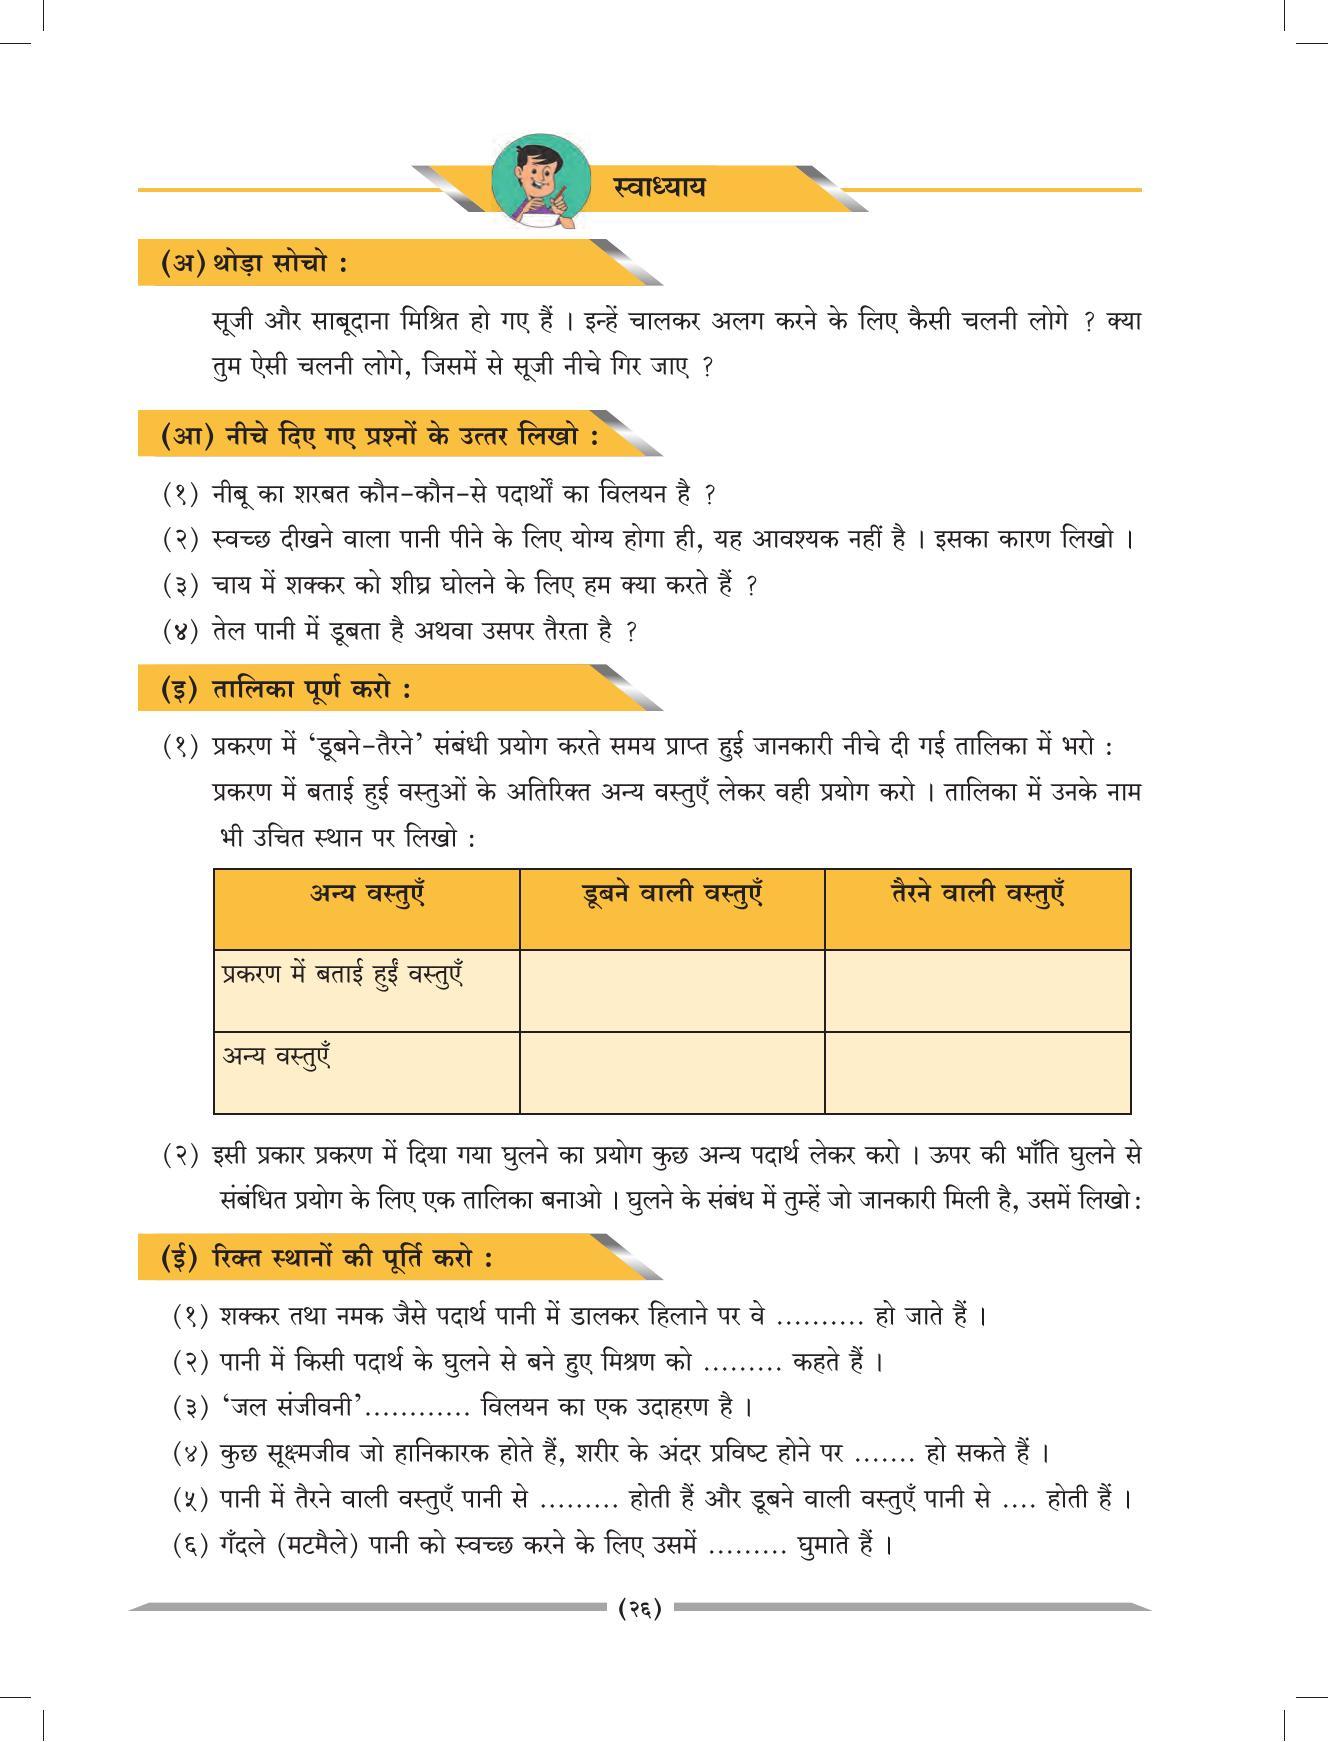 Maharashtra Board Class 4 EVS 1 (Hindi Medium) Textbook - Page 36